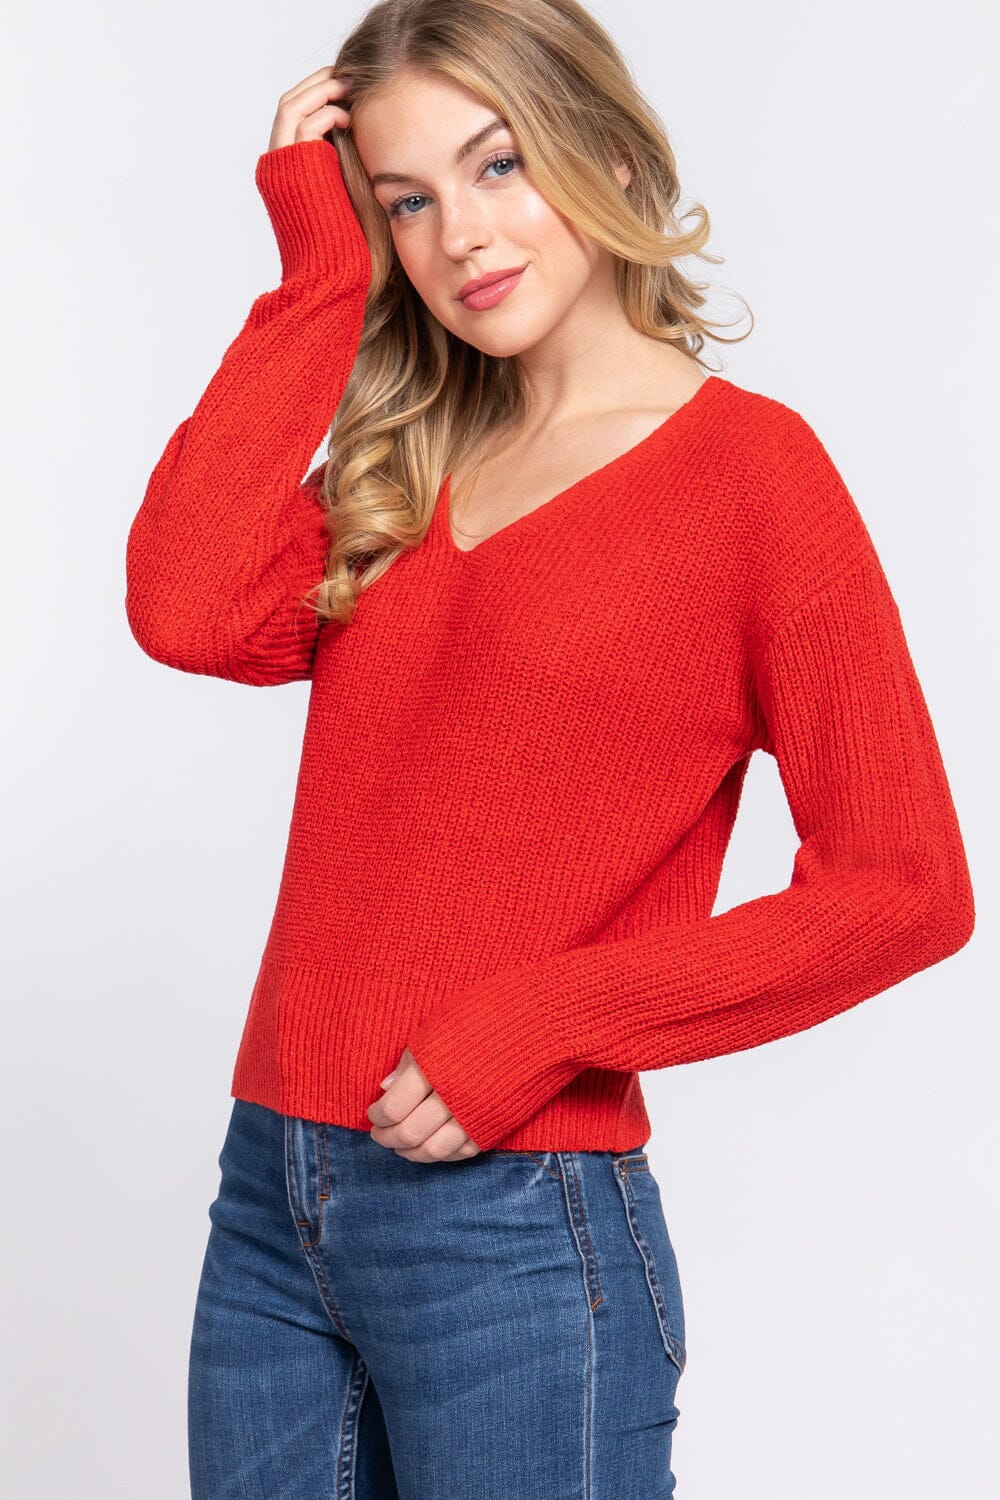 Orange Dolman Long Sleeve Strappy Open Back Sweater Top Shirts & Tops jehouze 